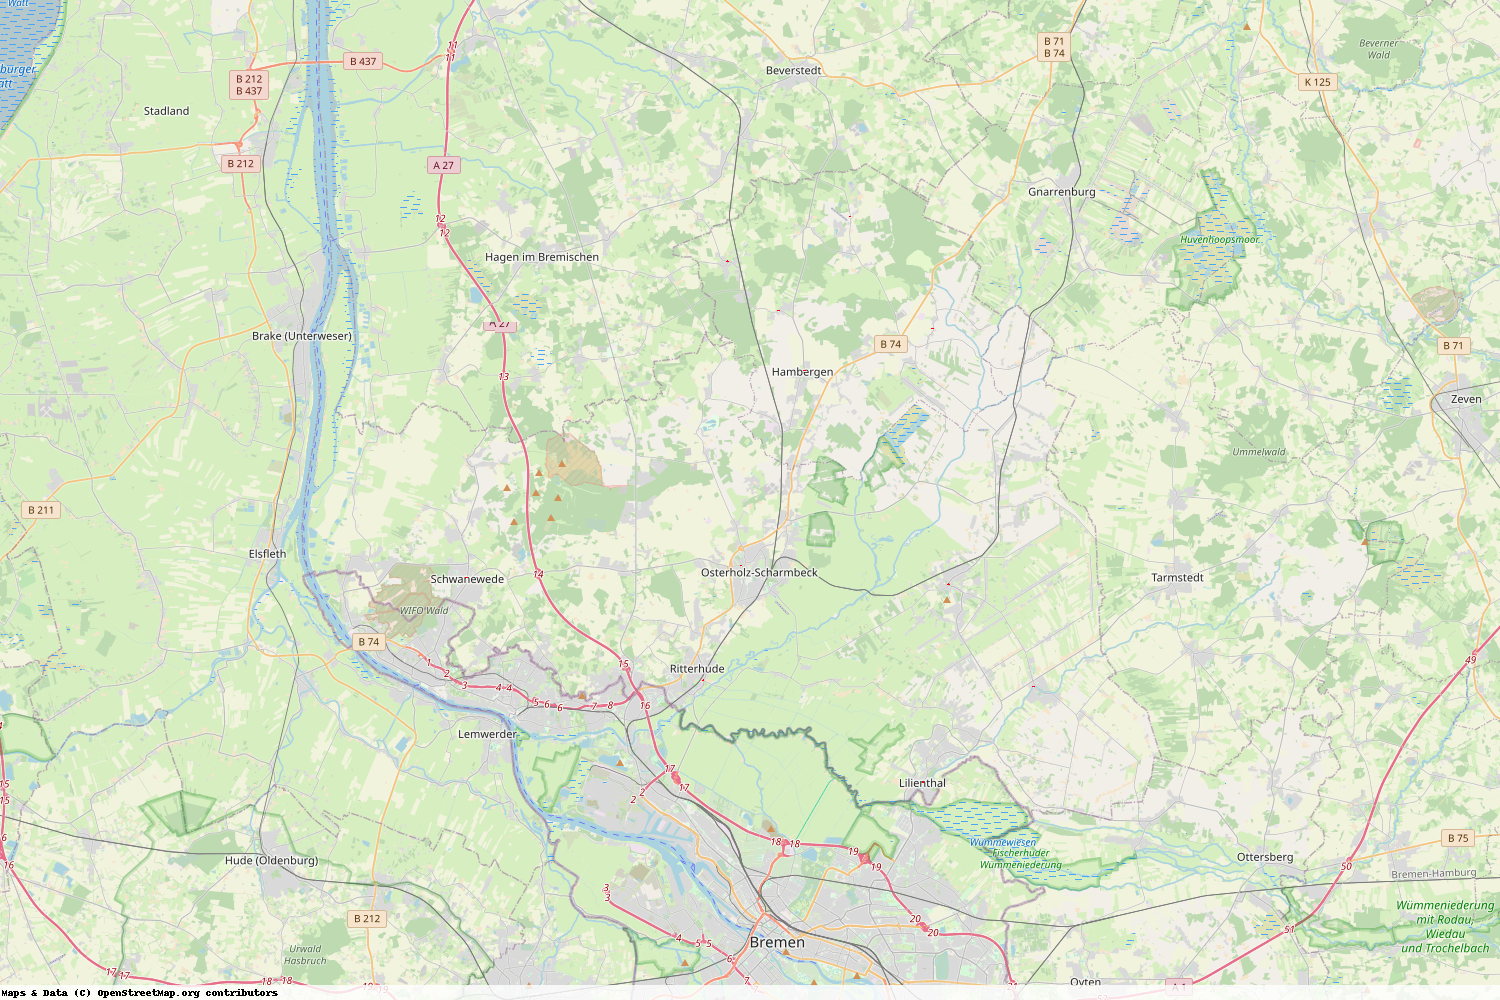 Ist gerade Stromausfall in Niedersachsen - Osterholz?